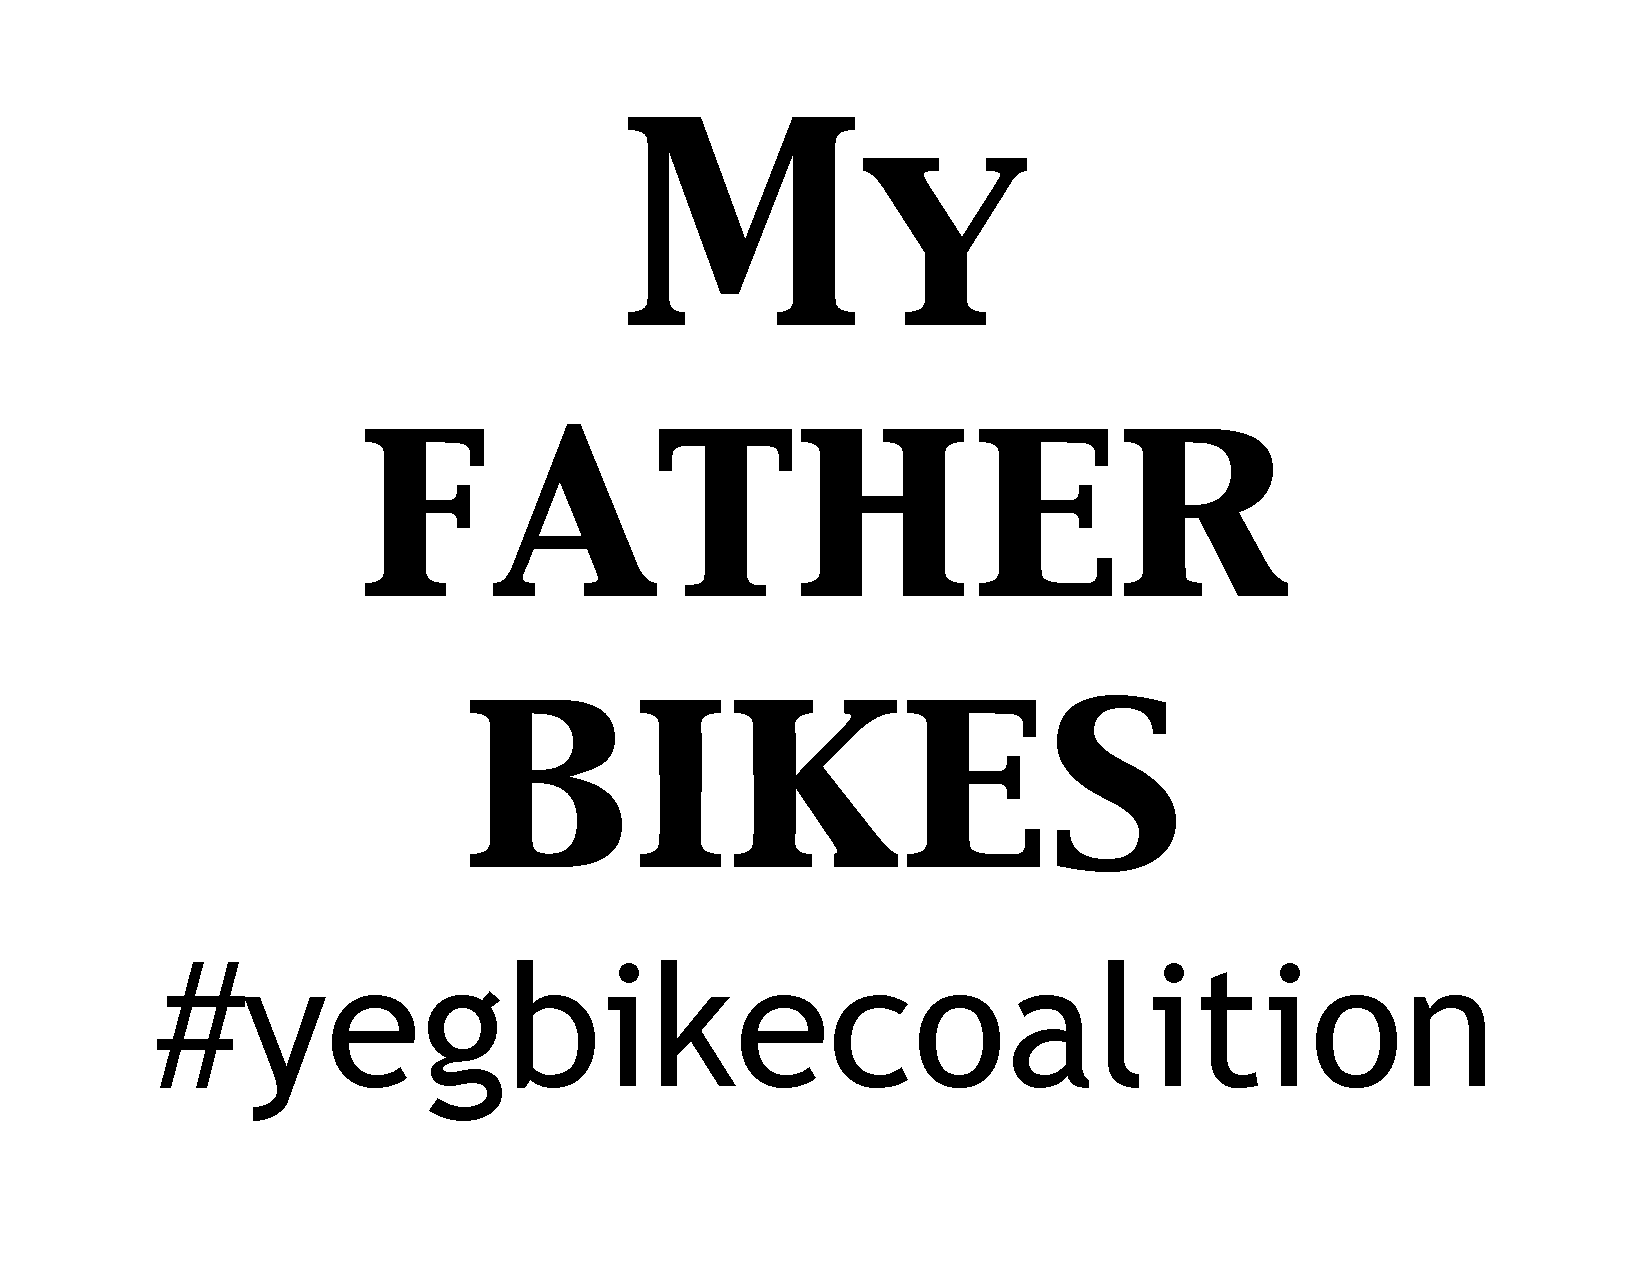 My father bikes